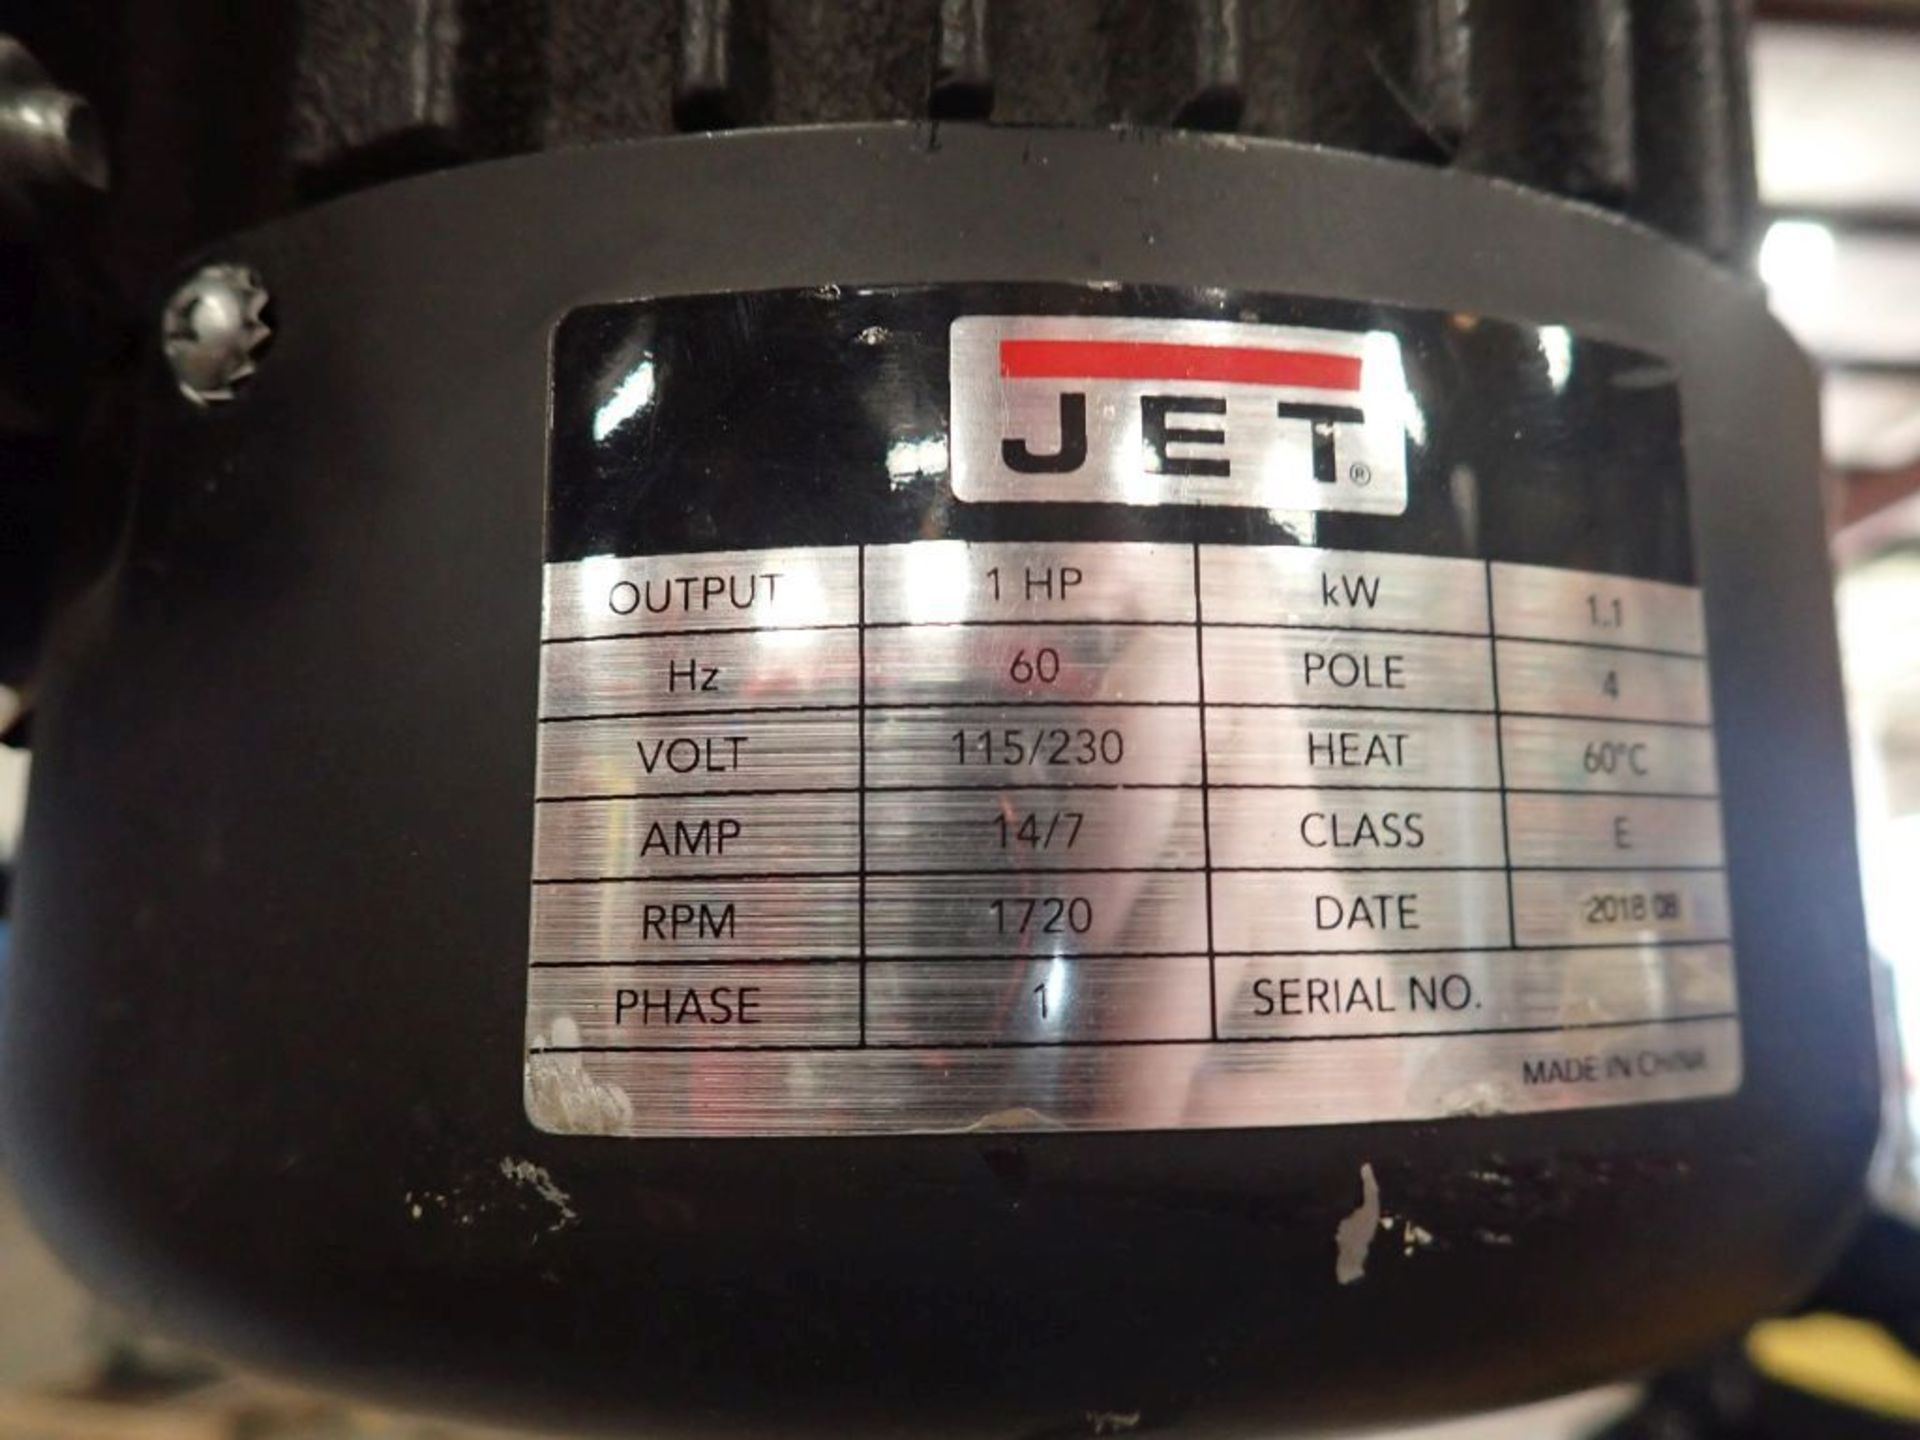 20" Jet Floor Drill Press - Serial No. 18082228; Model No. J-2550; Tag: 215125 - Image 7 of 13